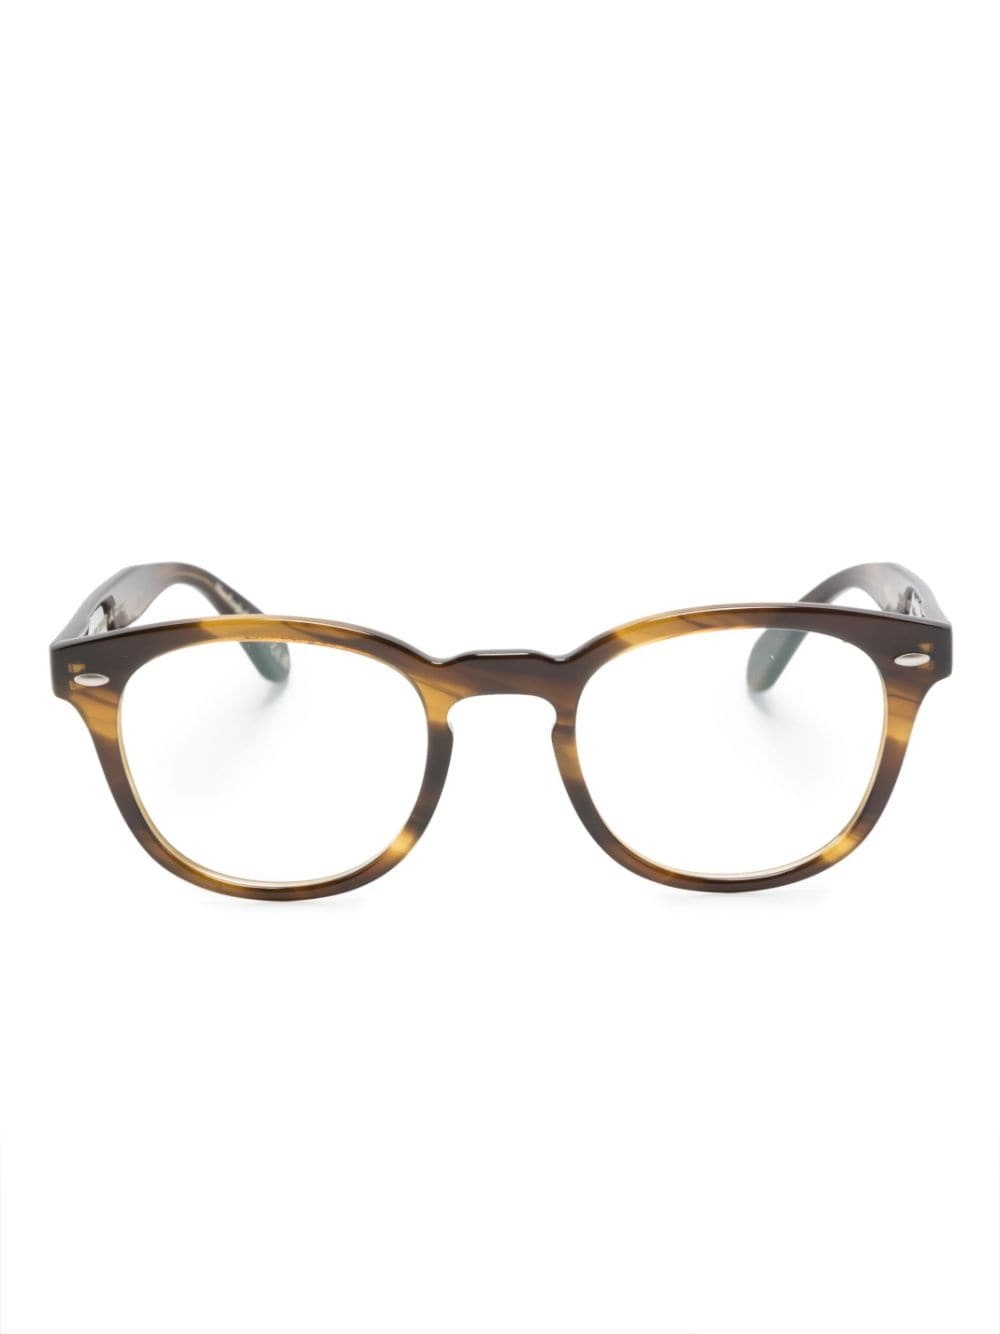 tonal-design round-frame glasses - 1